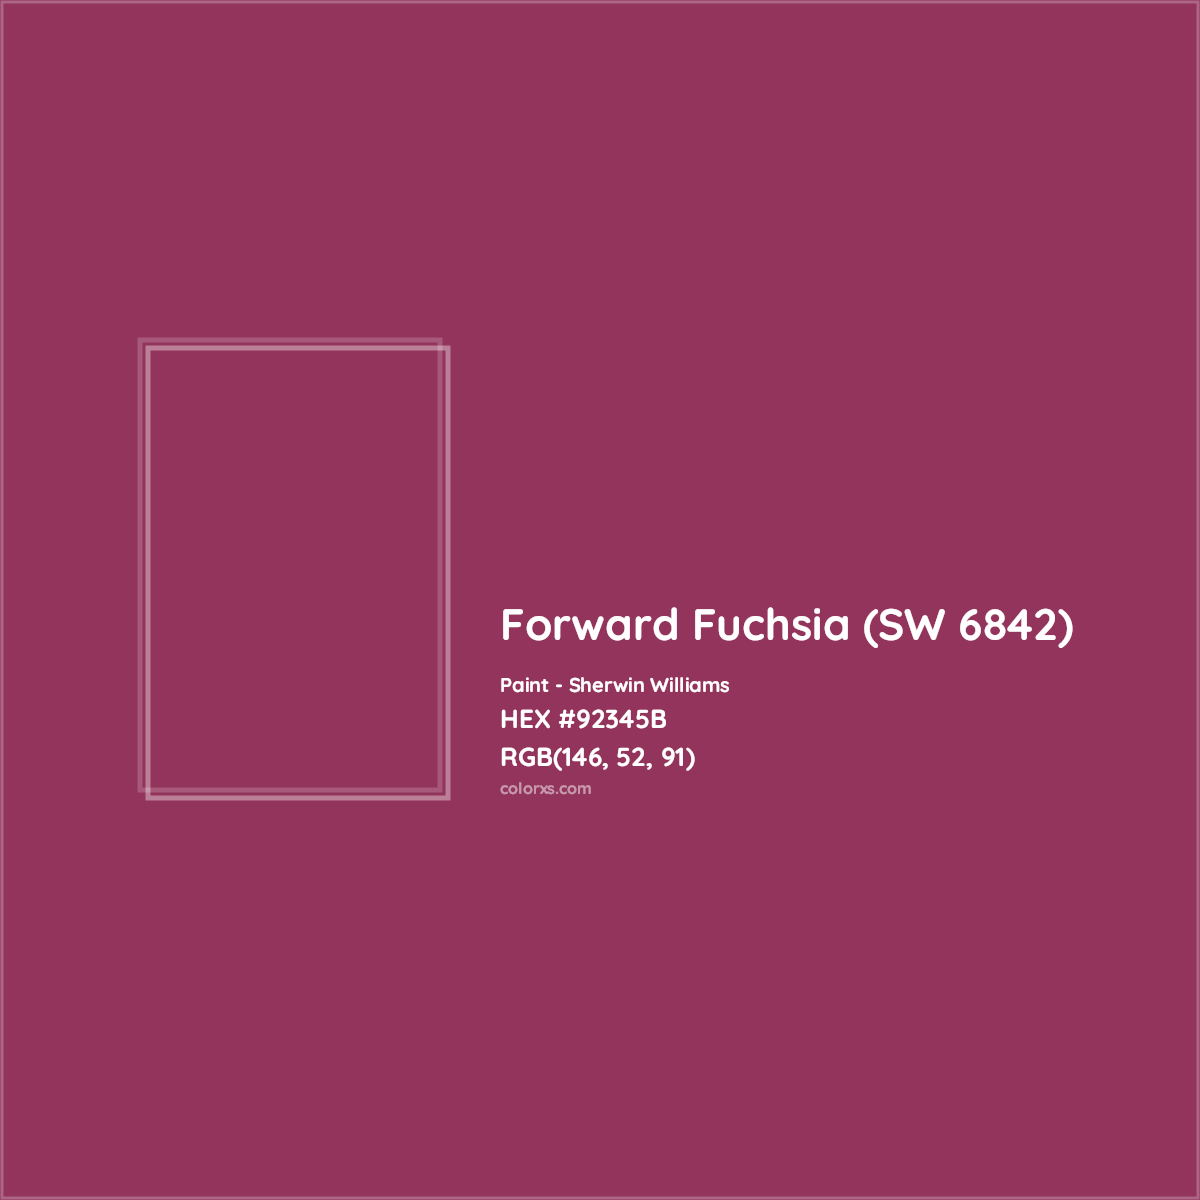 HEX #92345B Forward Fuchsia (SW 6842) Paint Sherwin Williams - Color Code